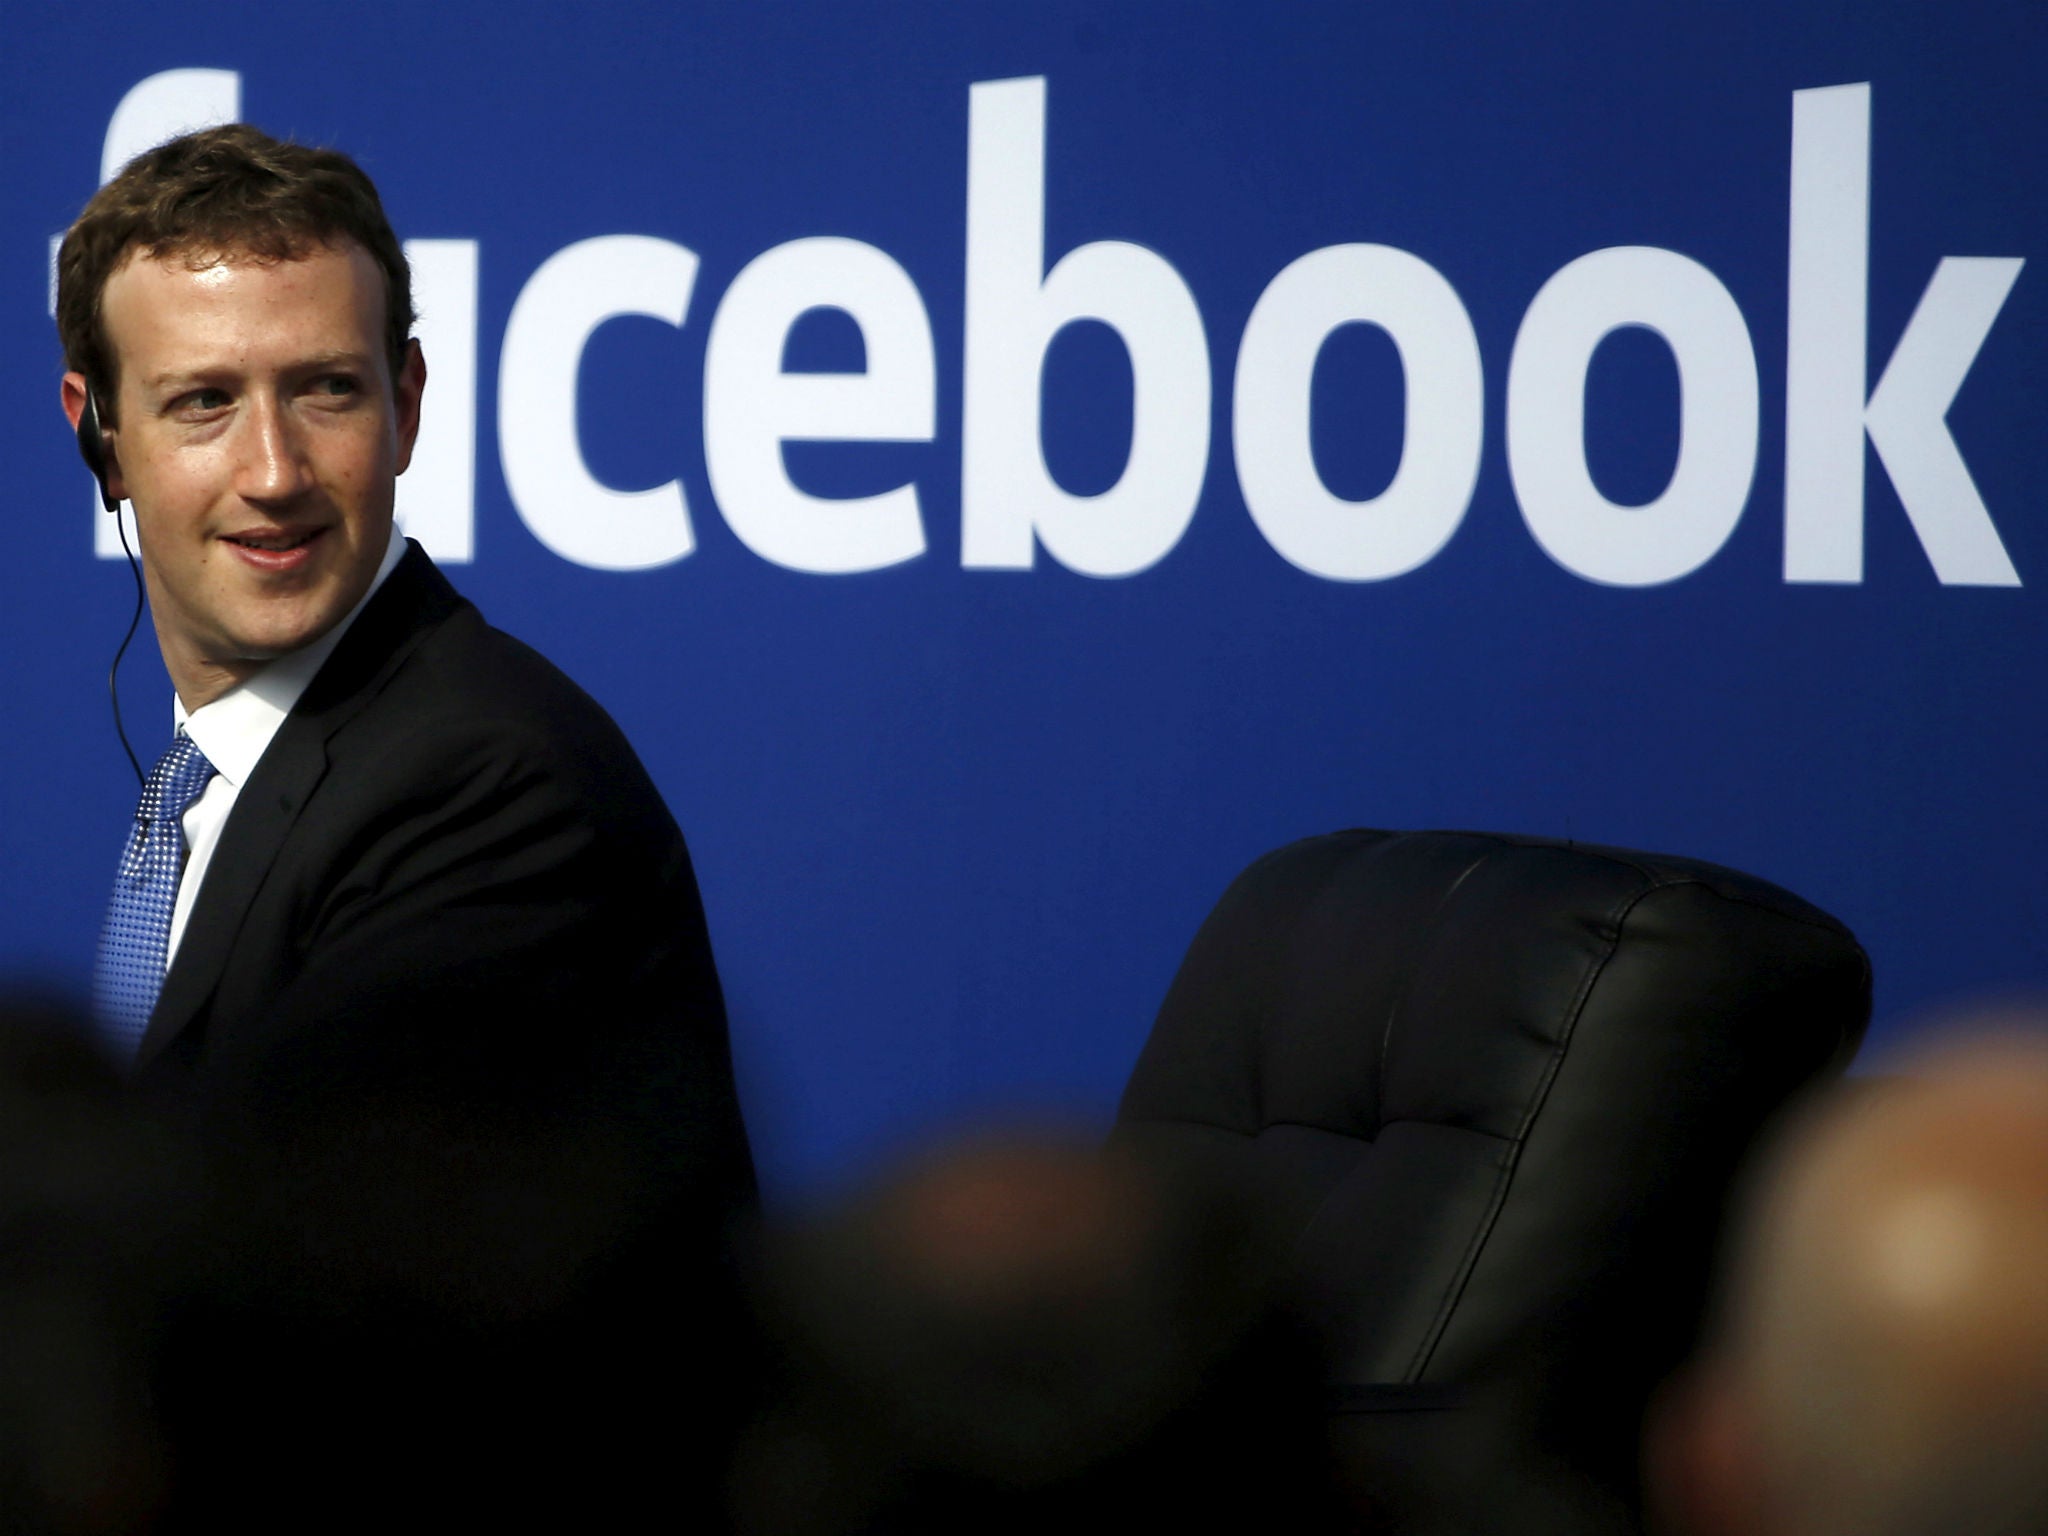 Facebook CEO Mark Zuckerberg during a town hall at Facebook's headquarters in Menlo Park, California